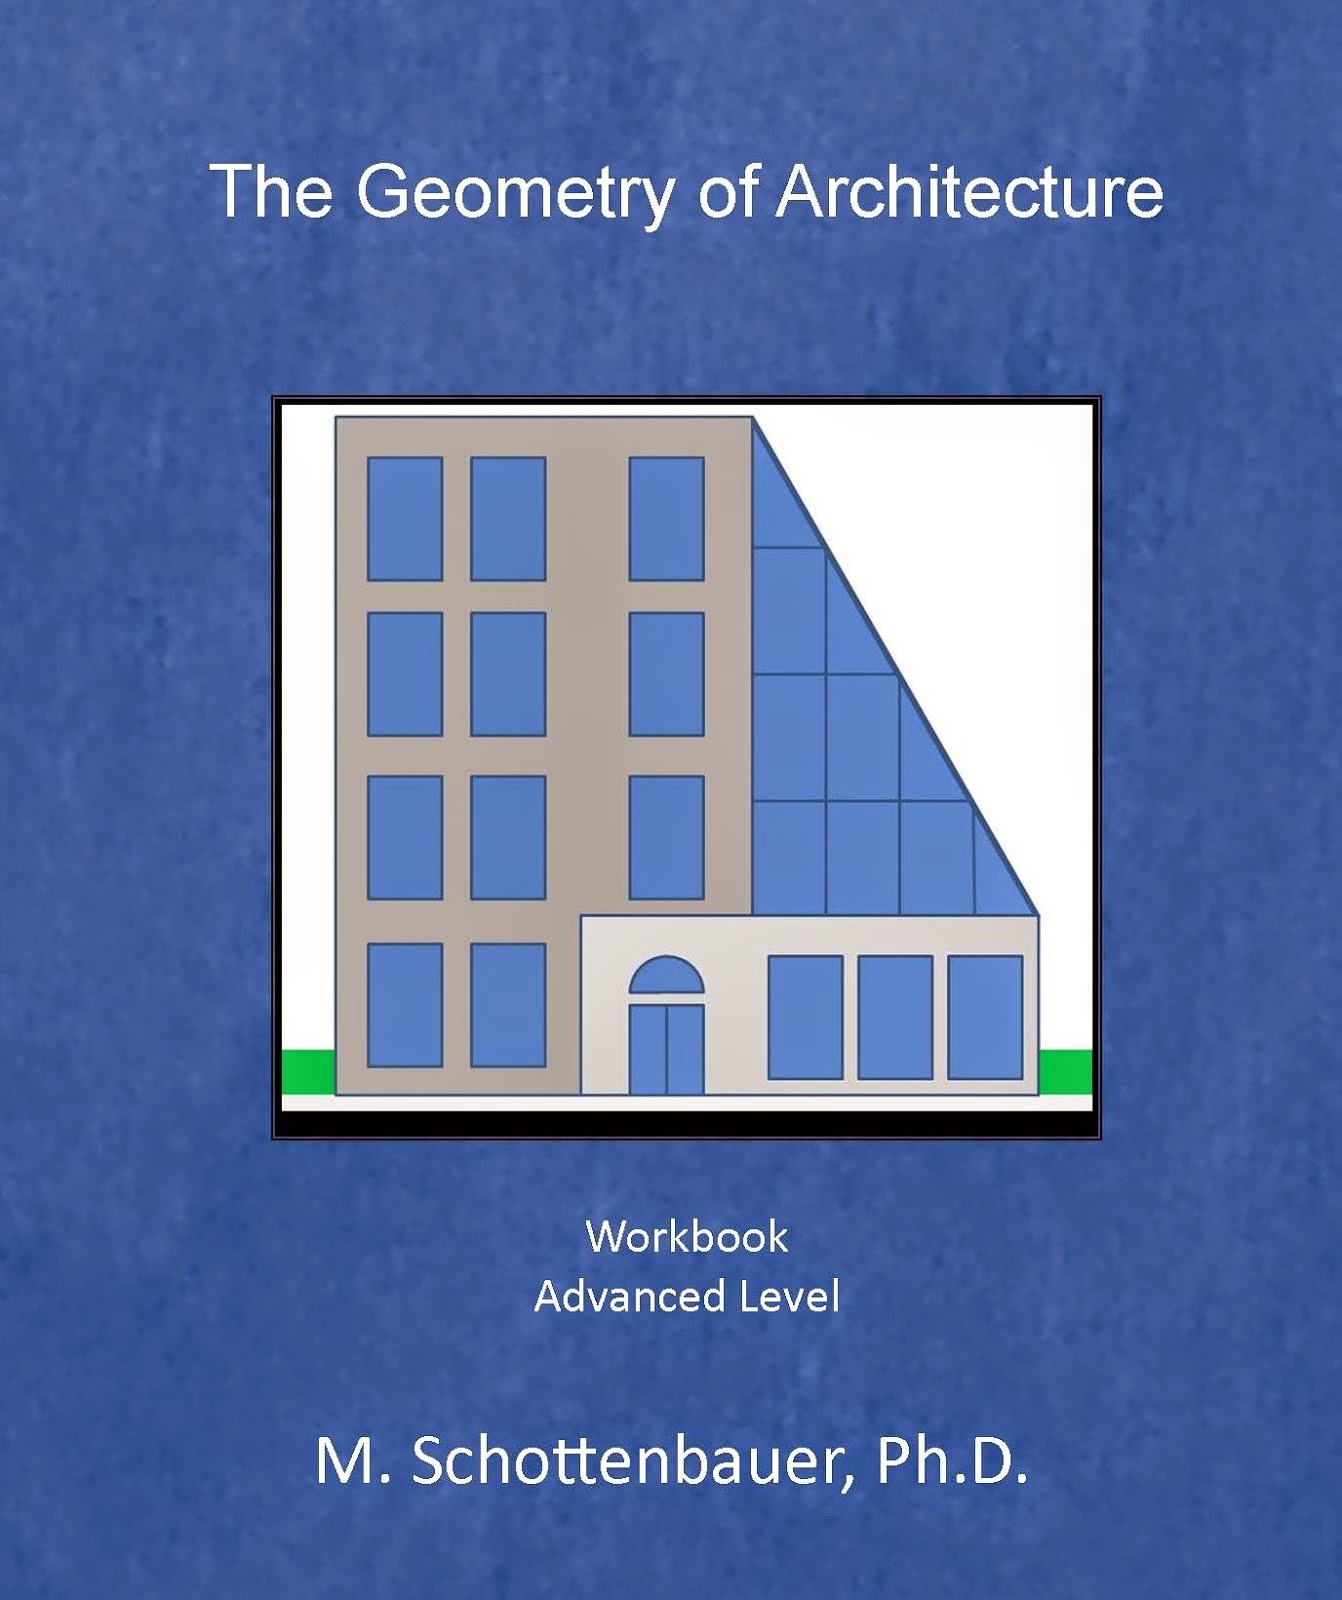 Geometry Workbooks: Geometry Workbooks are Exciting & Innovative!